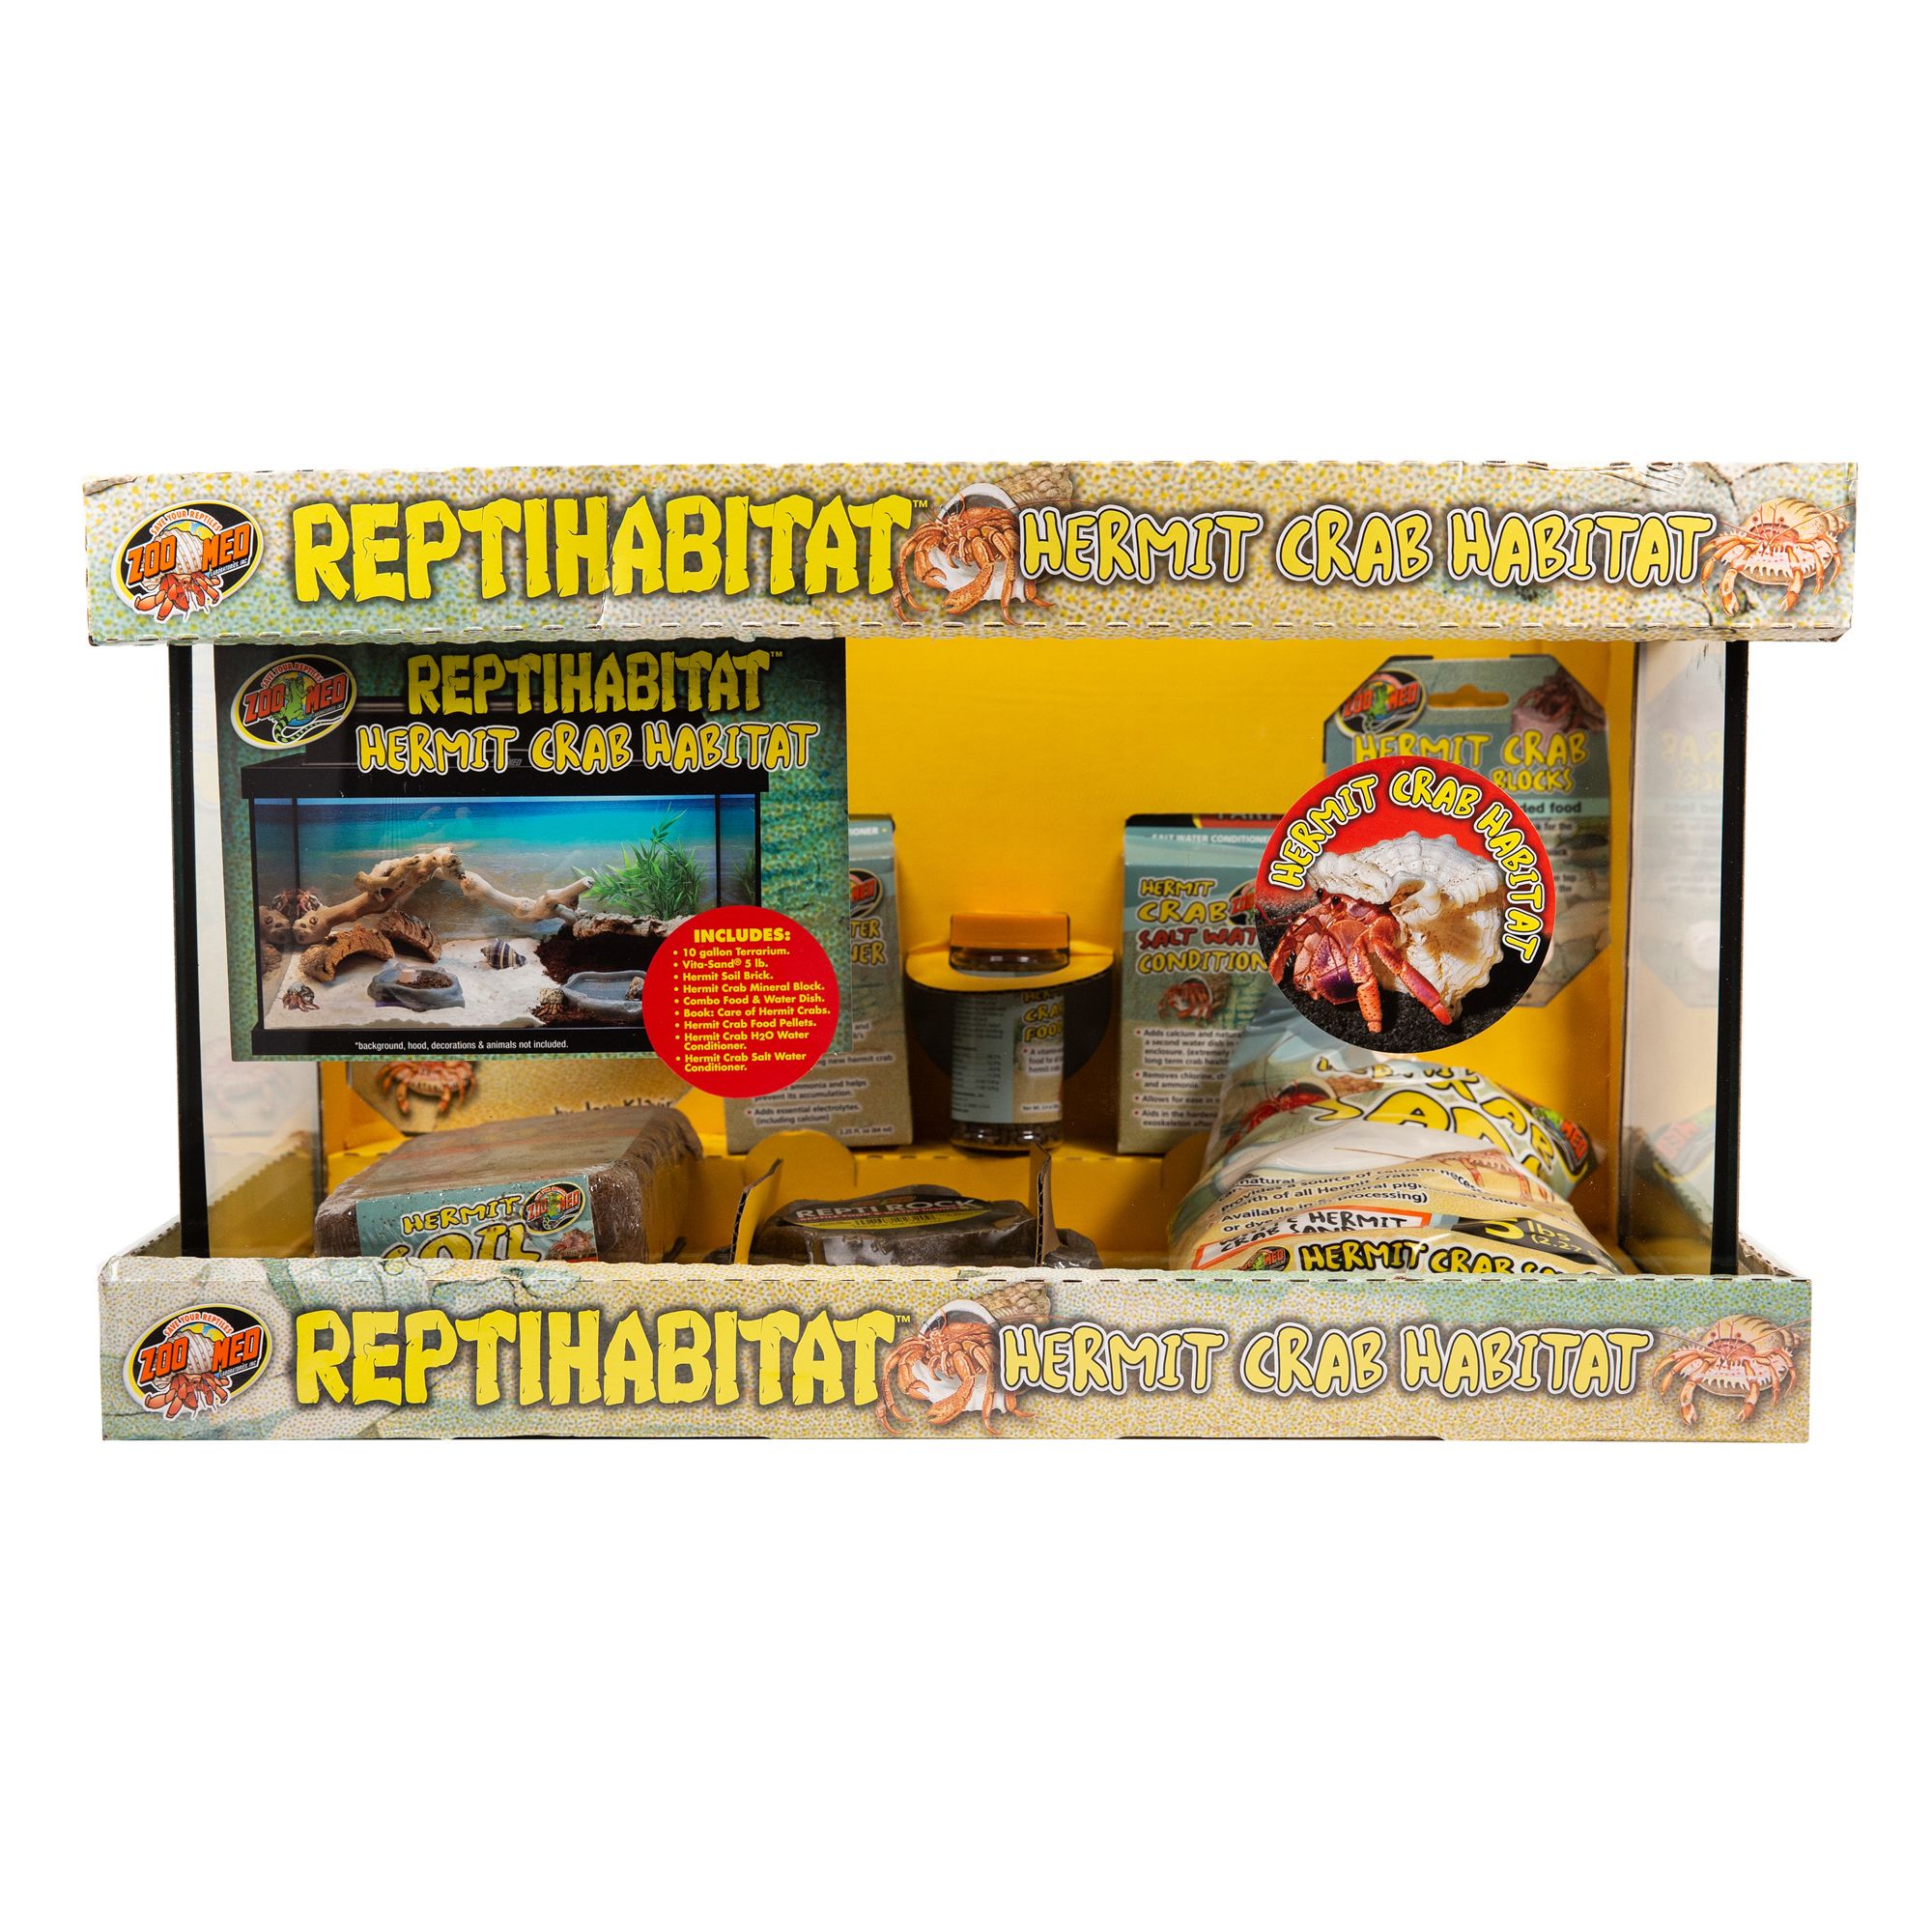 hermit crab food petsmart